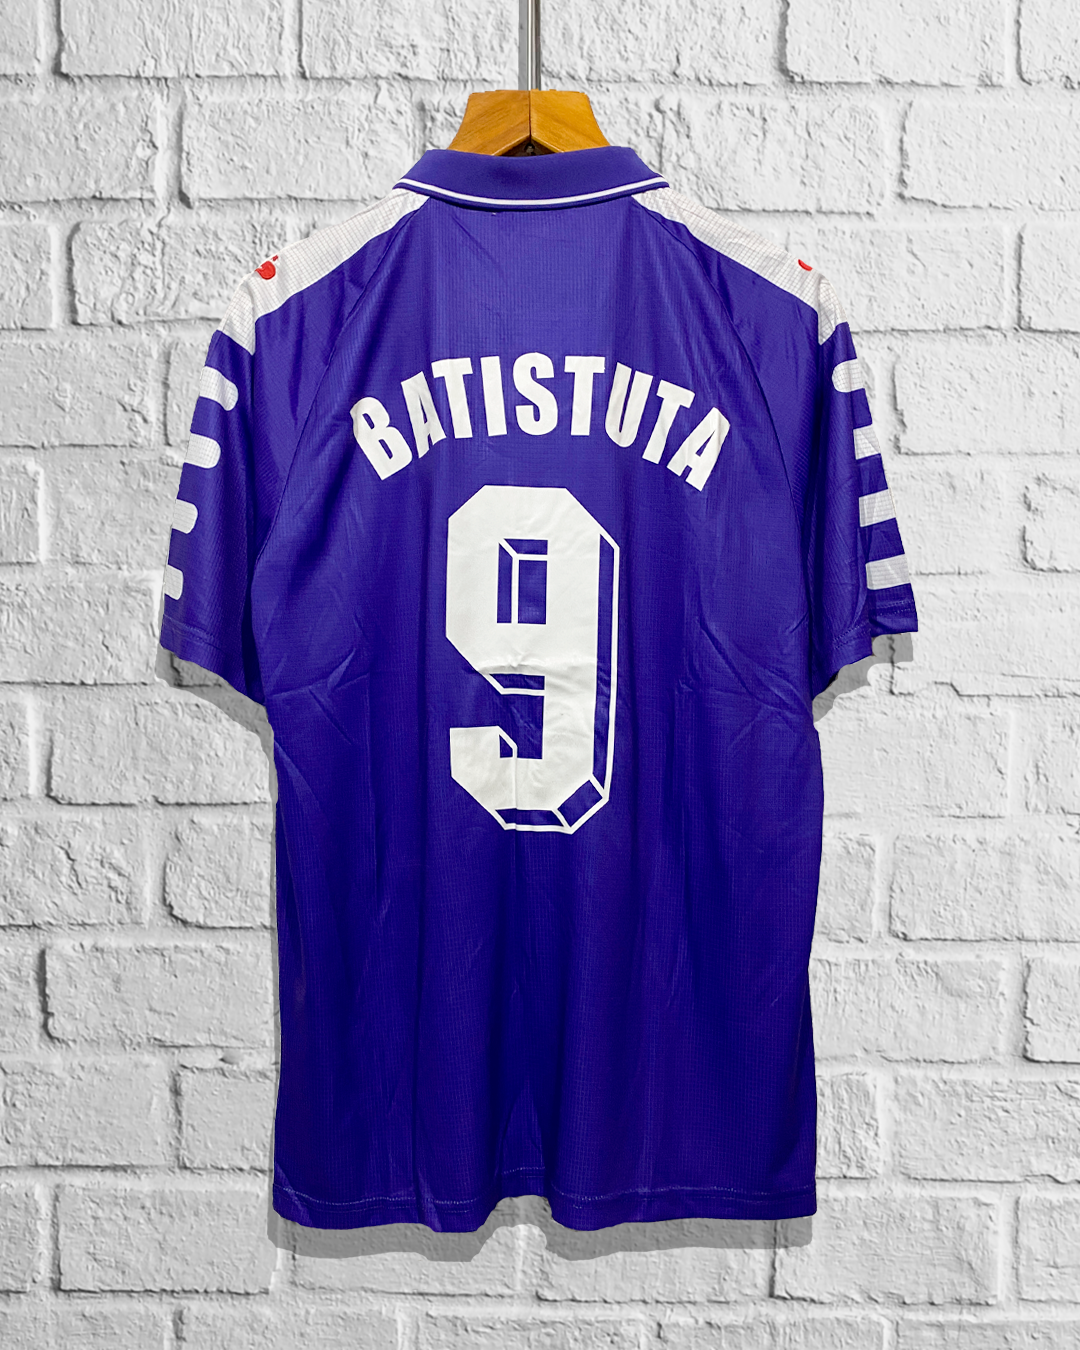 Jersey Retro Fiorentina 1998 1999 Local Batistuta dorsal